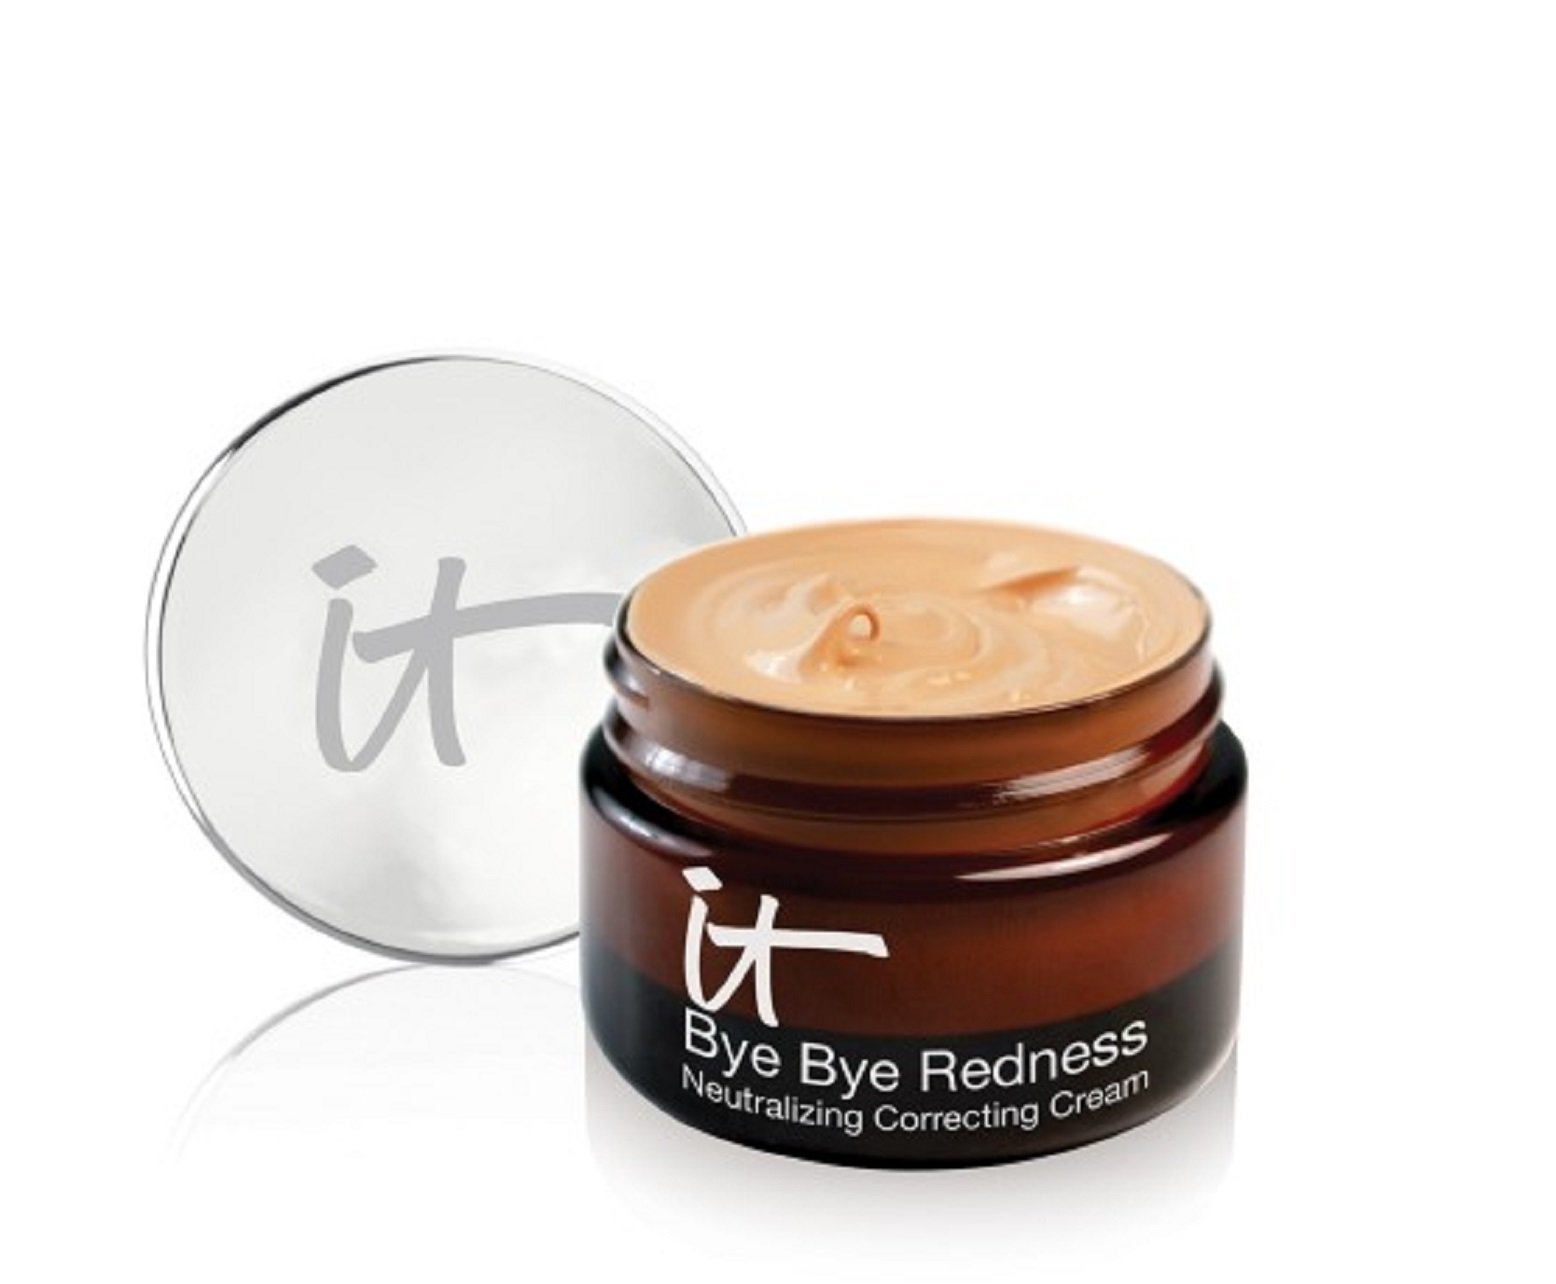 IT Cosmetics Bye Bye Redness Neutralizing Correcting Cream 0.37 fl oz. by IT Cosmetics BEAUTY - Glumech